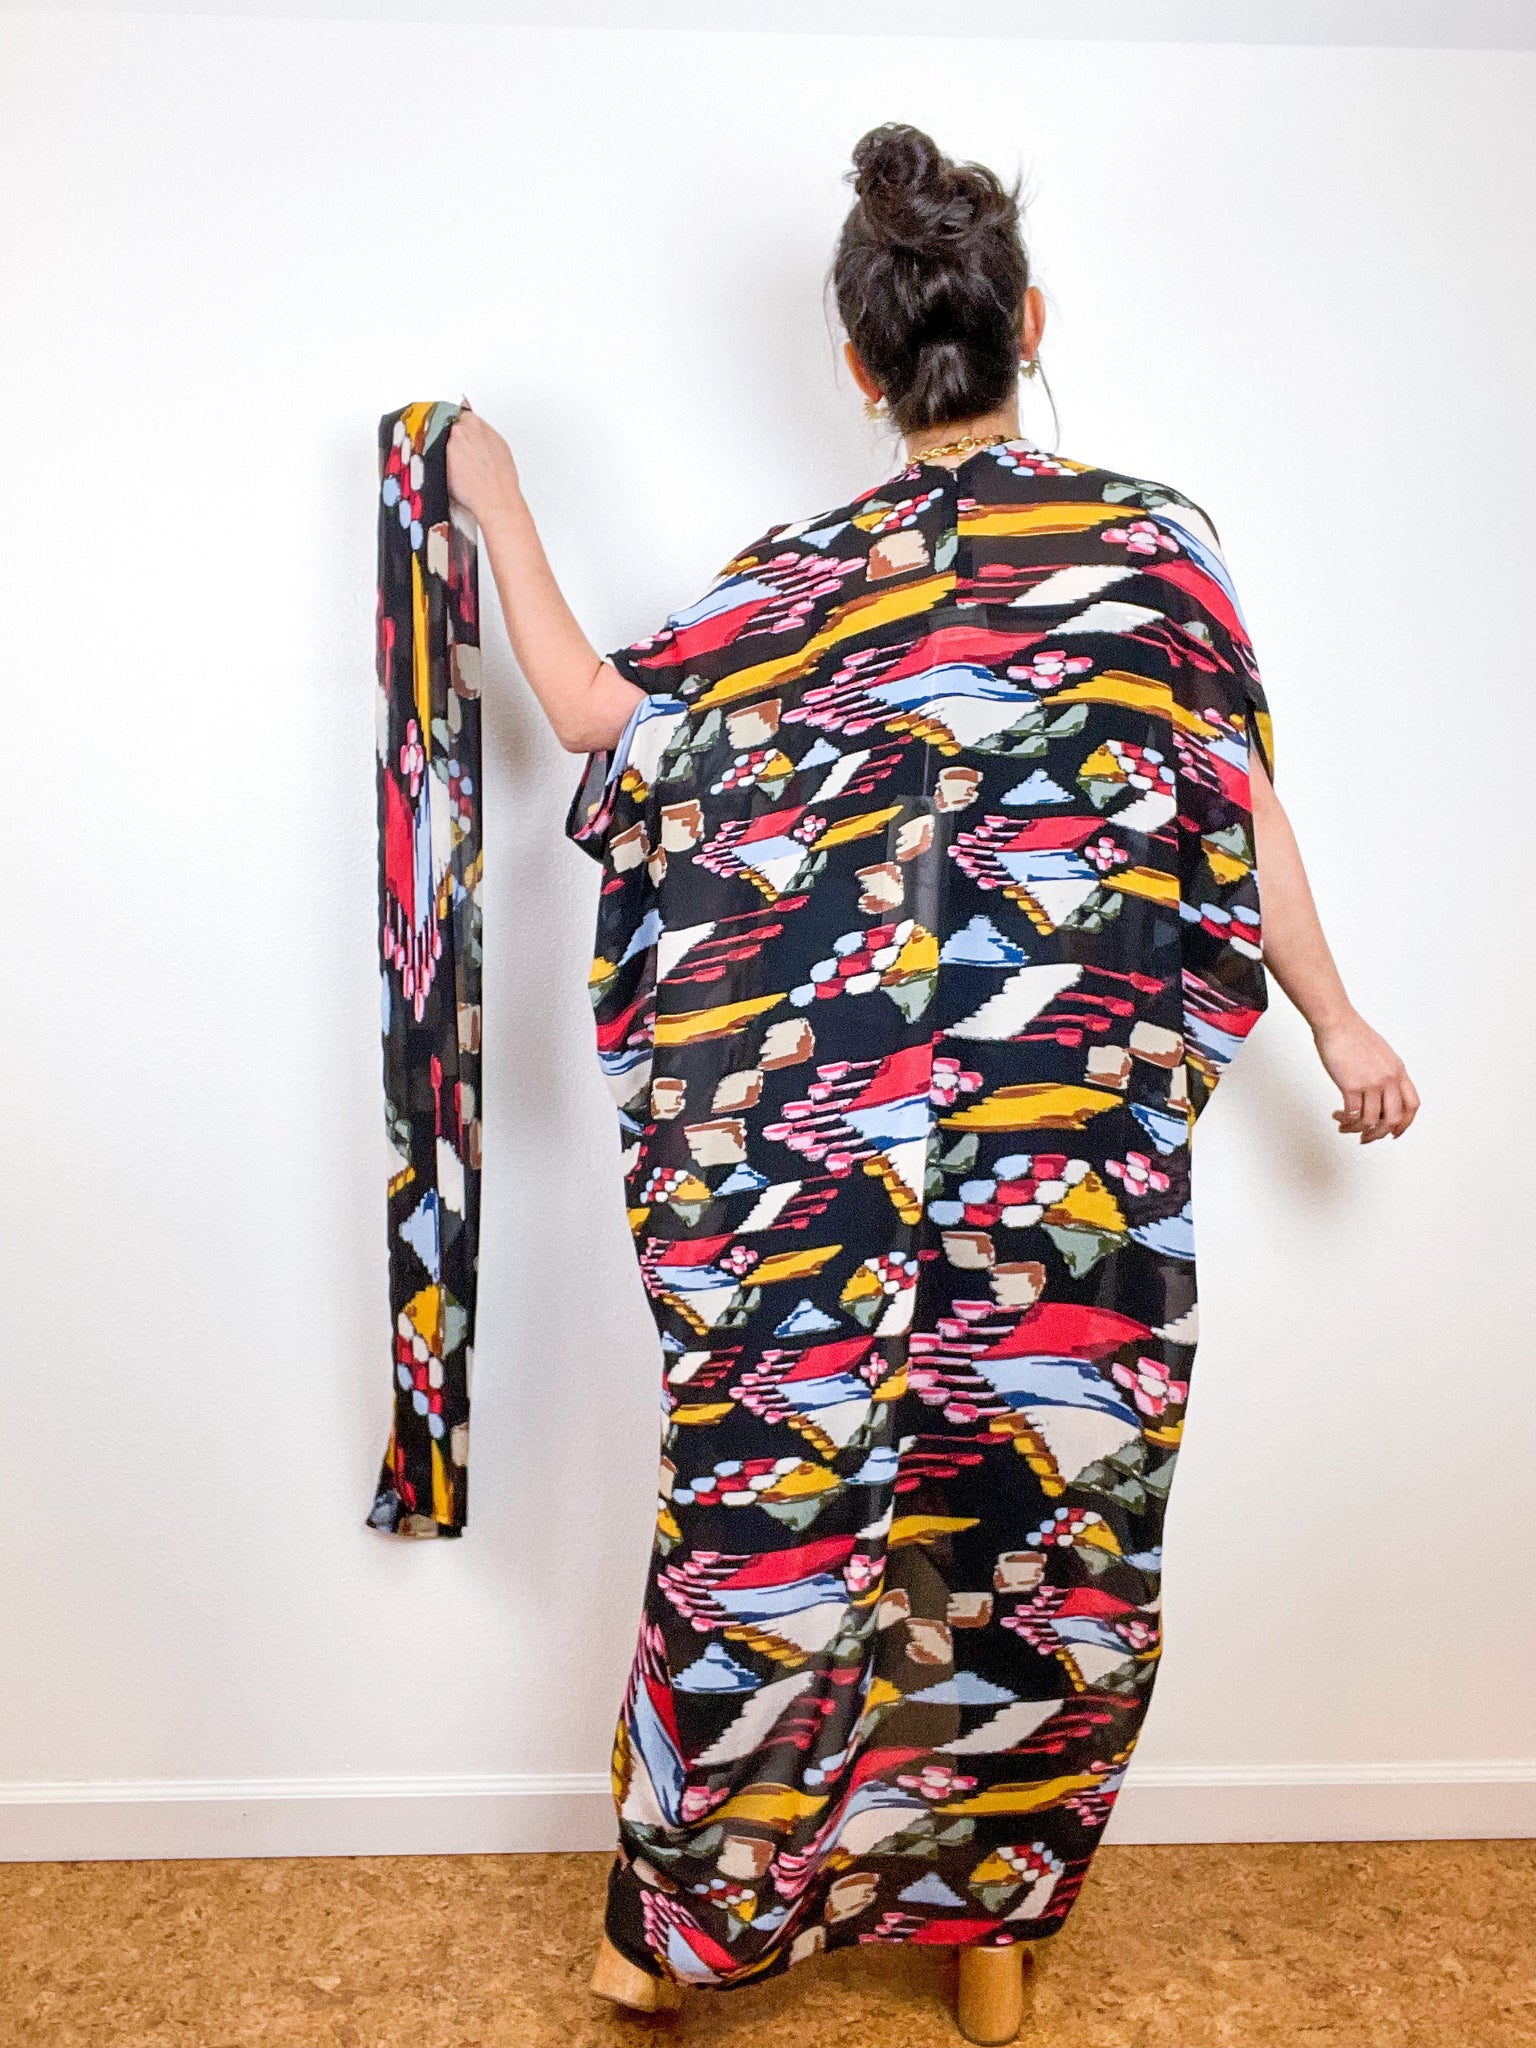 Print High Low Kimono Black Ikat Chiffon